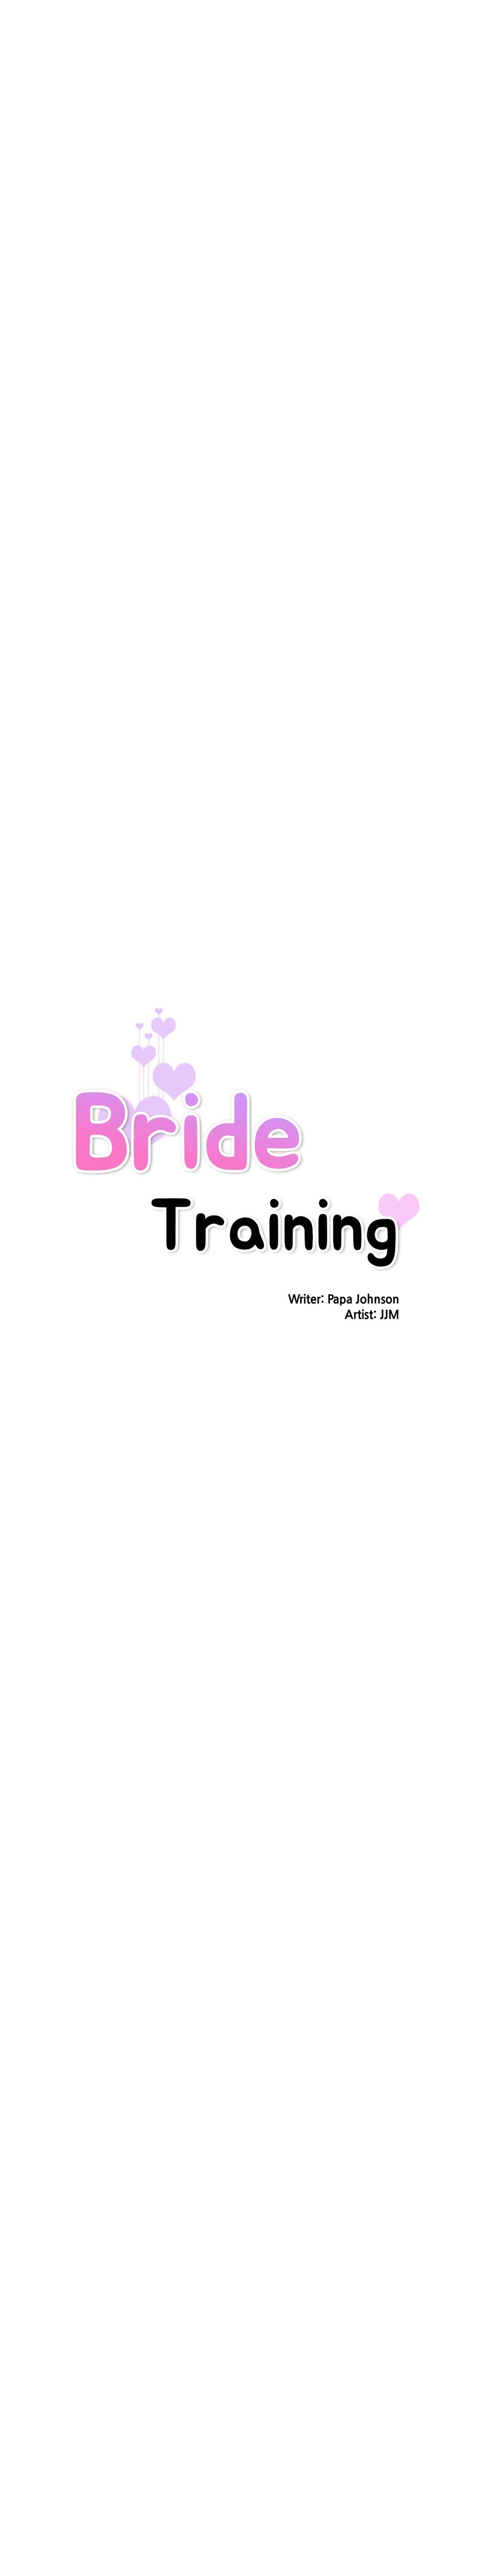 bride-training-chap-25-2